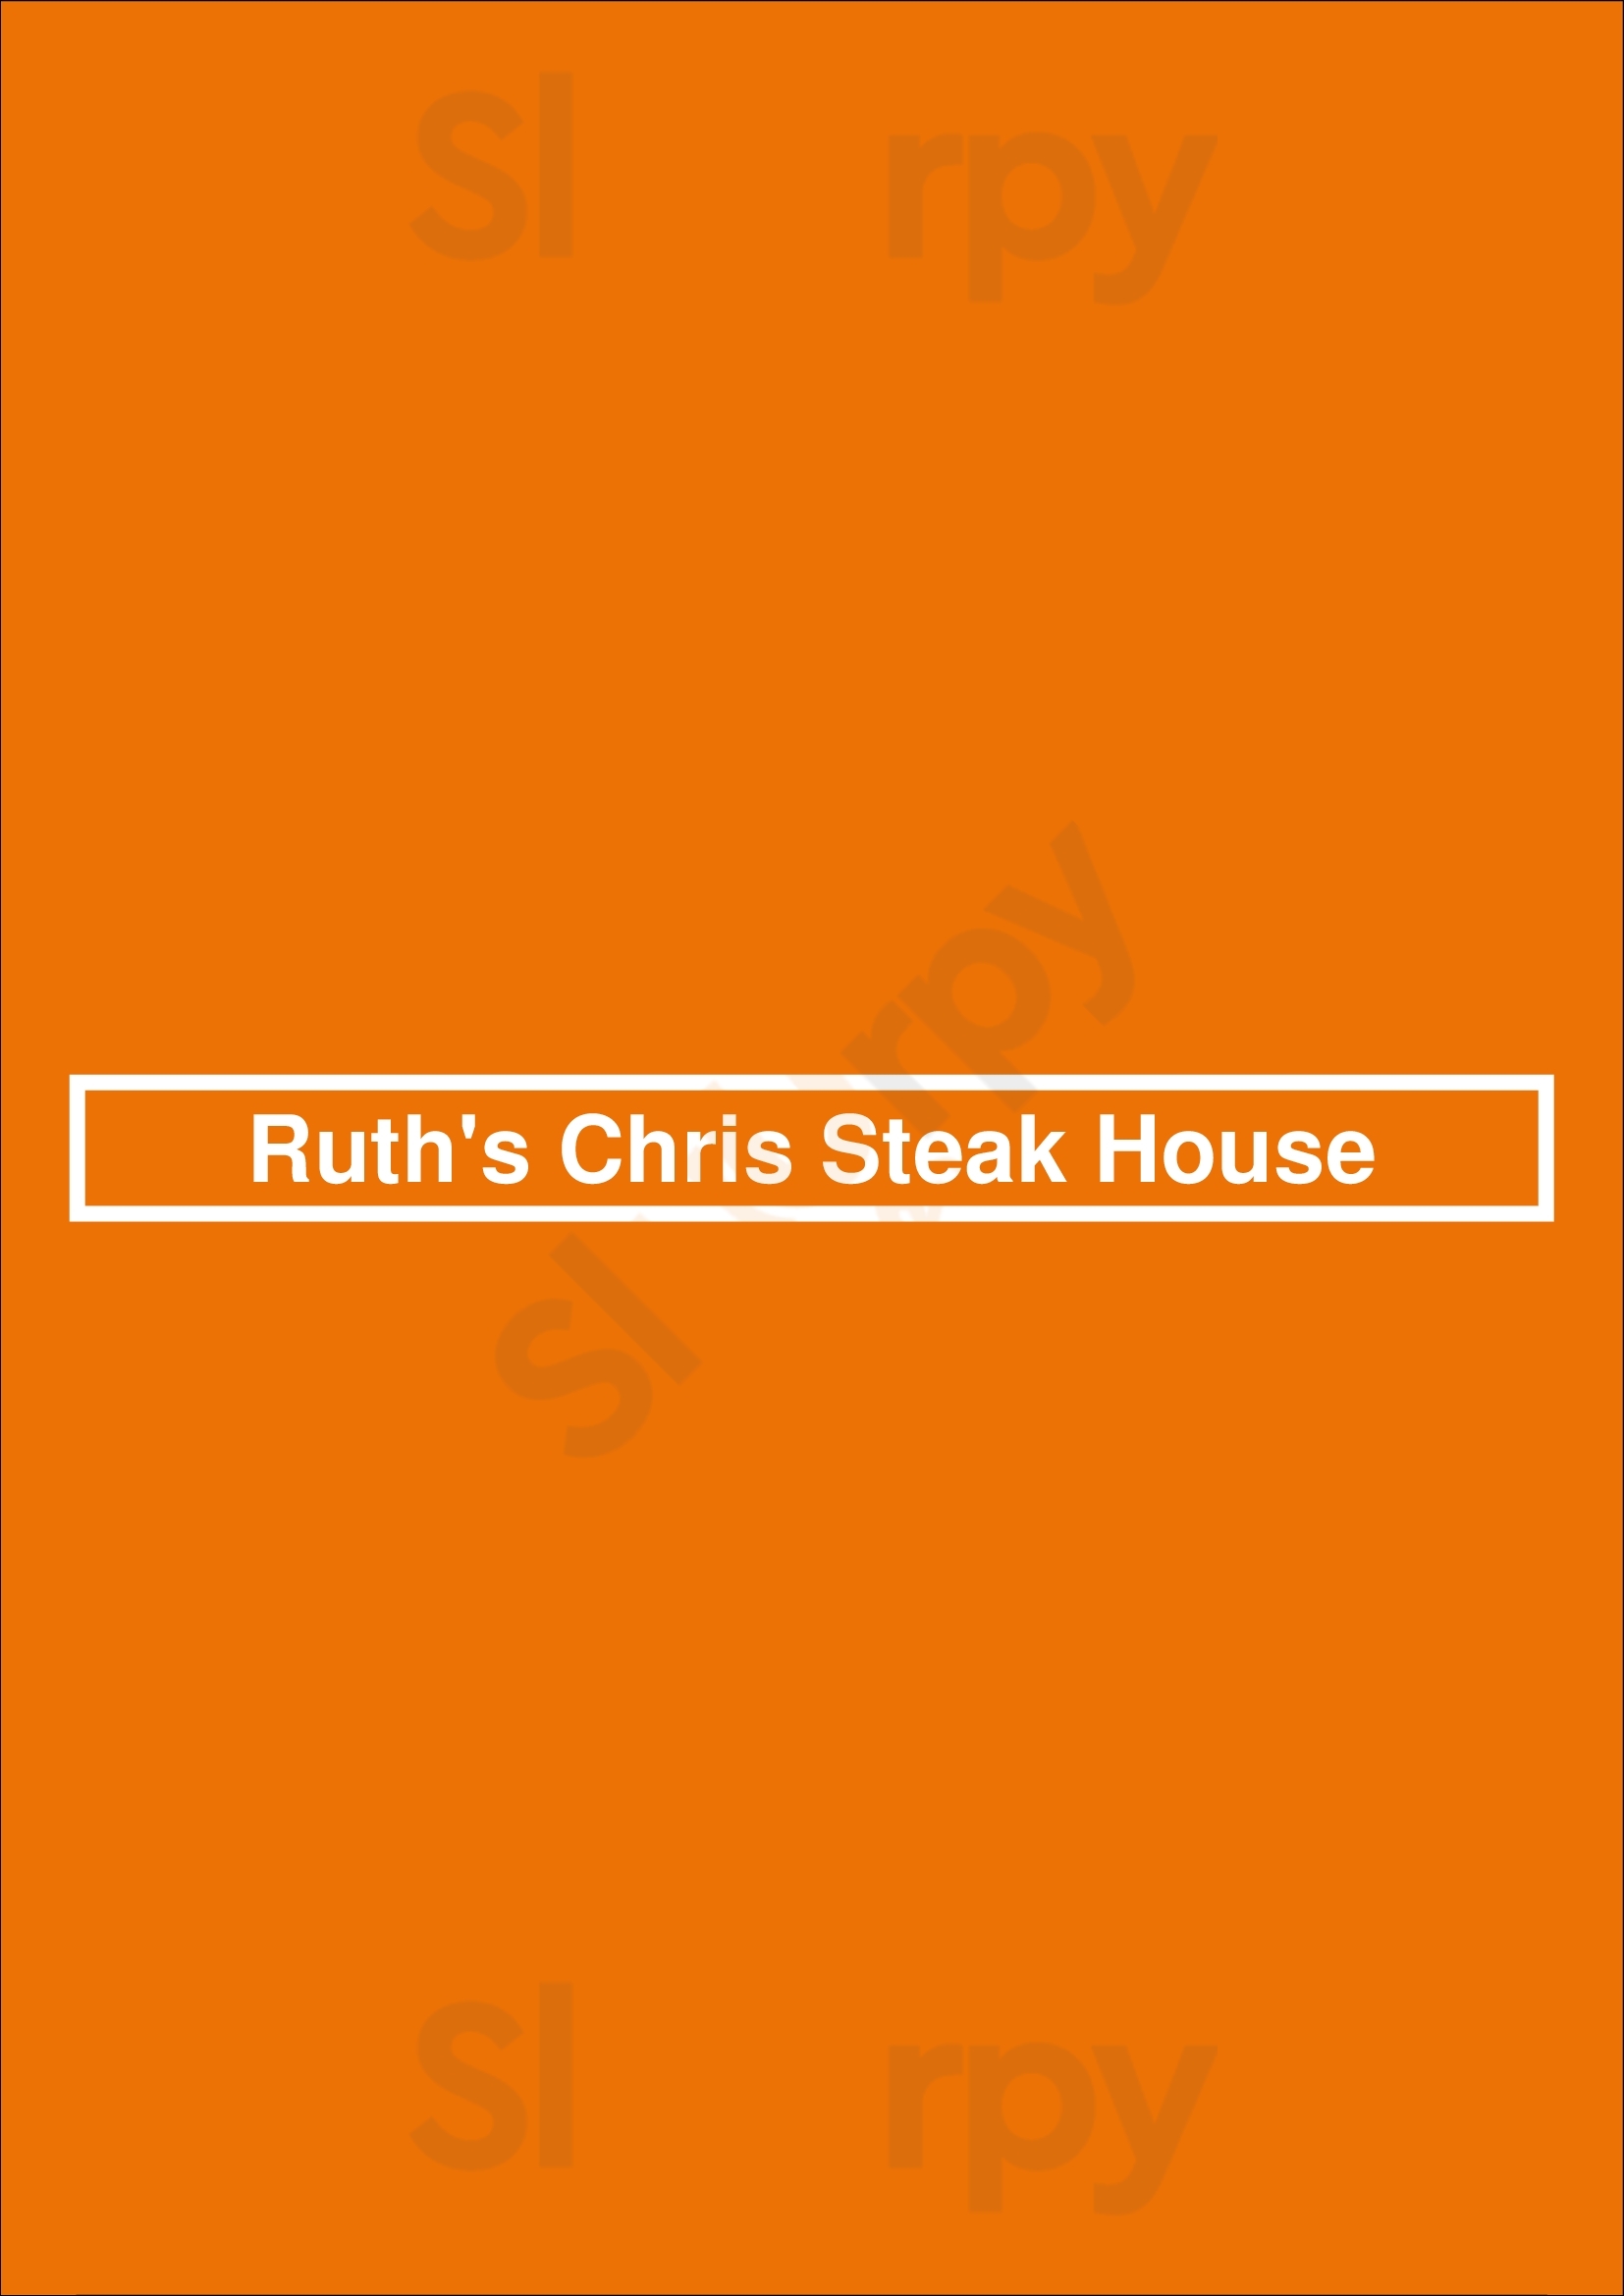 Ruth's Chris Steak House Austin Menu - 1